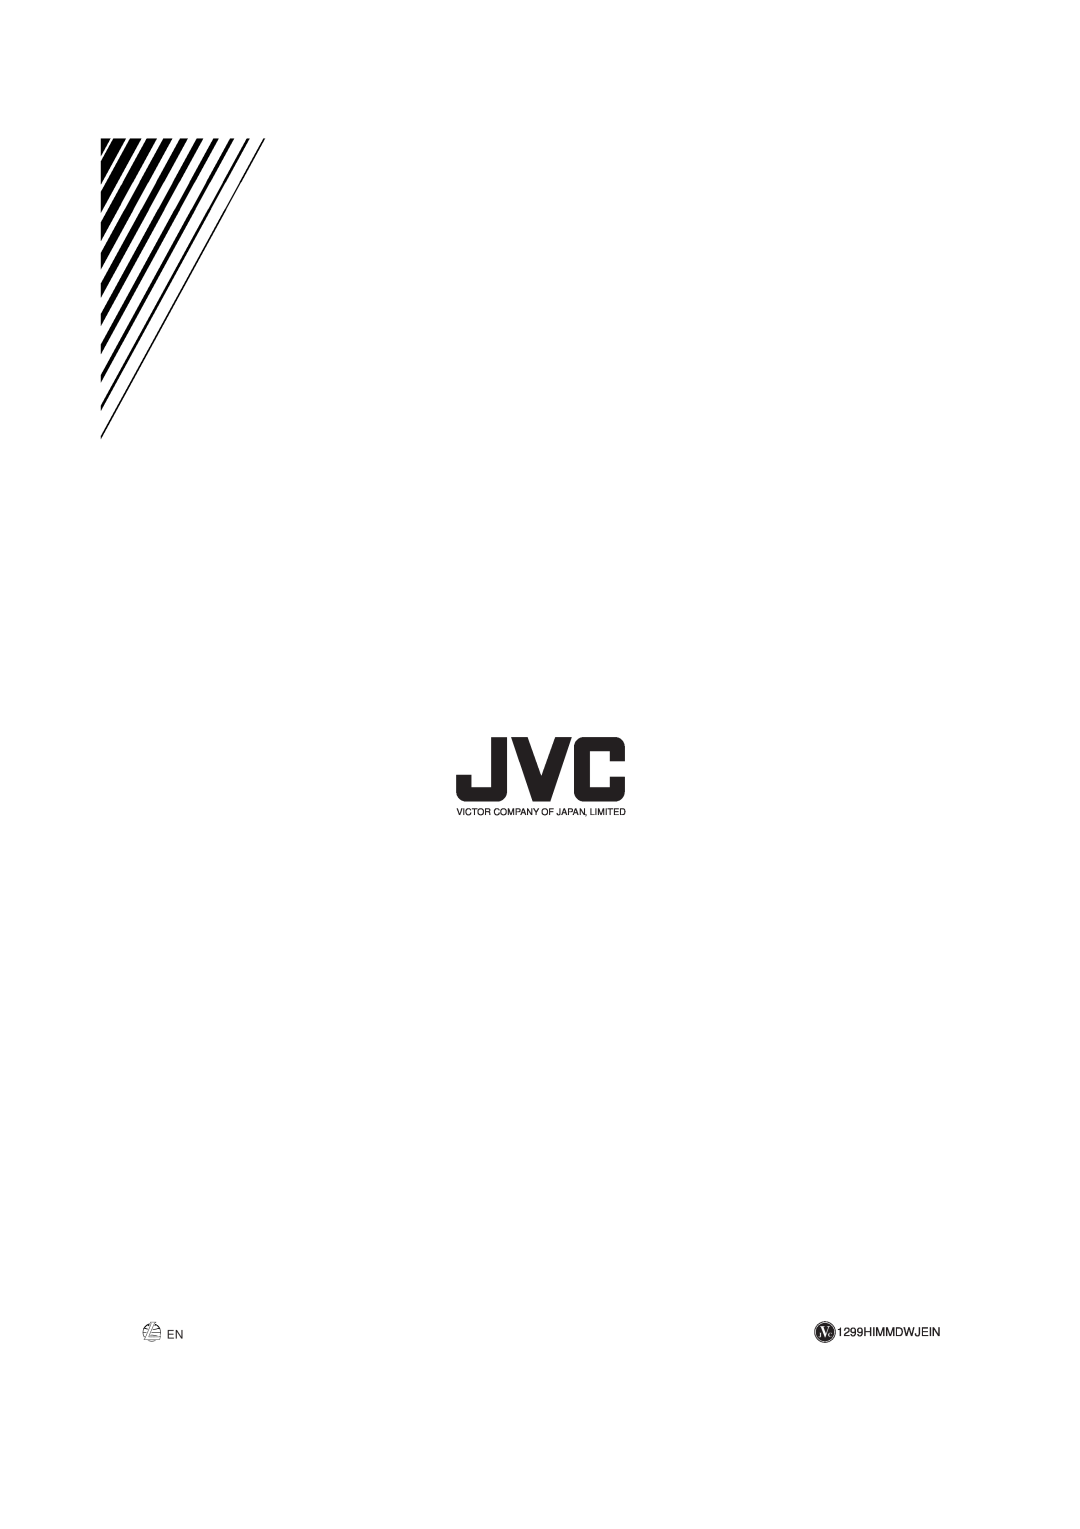 JVC RX-6000VBK, RX-6008VBK manual J C 1299HIMMDWJEIN, Victor Company Of Japan, Limited 